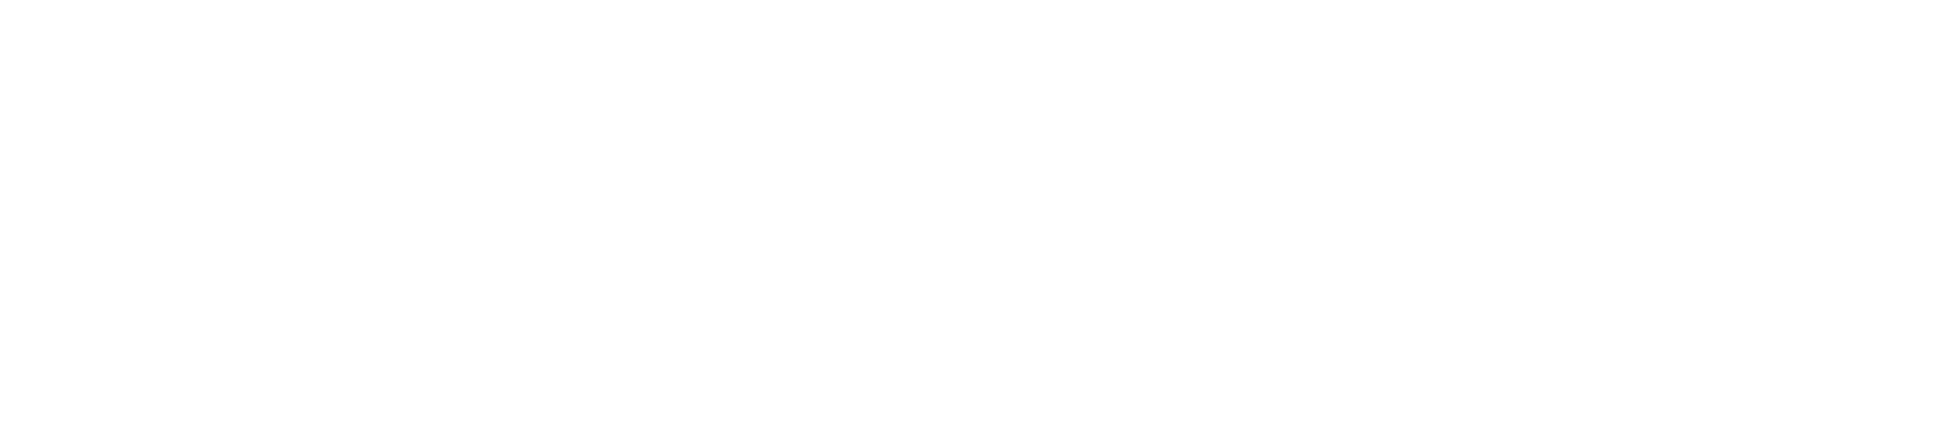 Treat codes, logotip